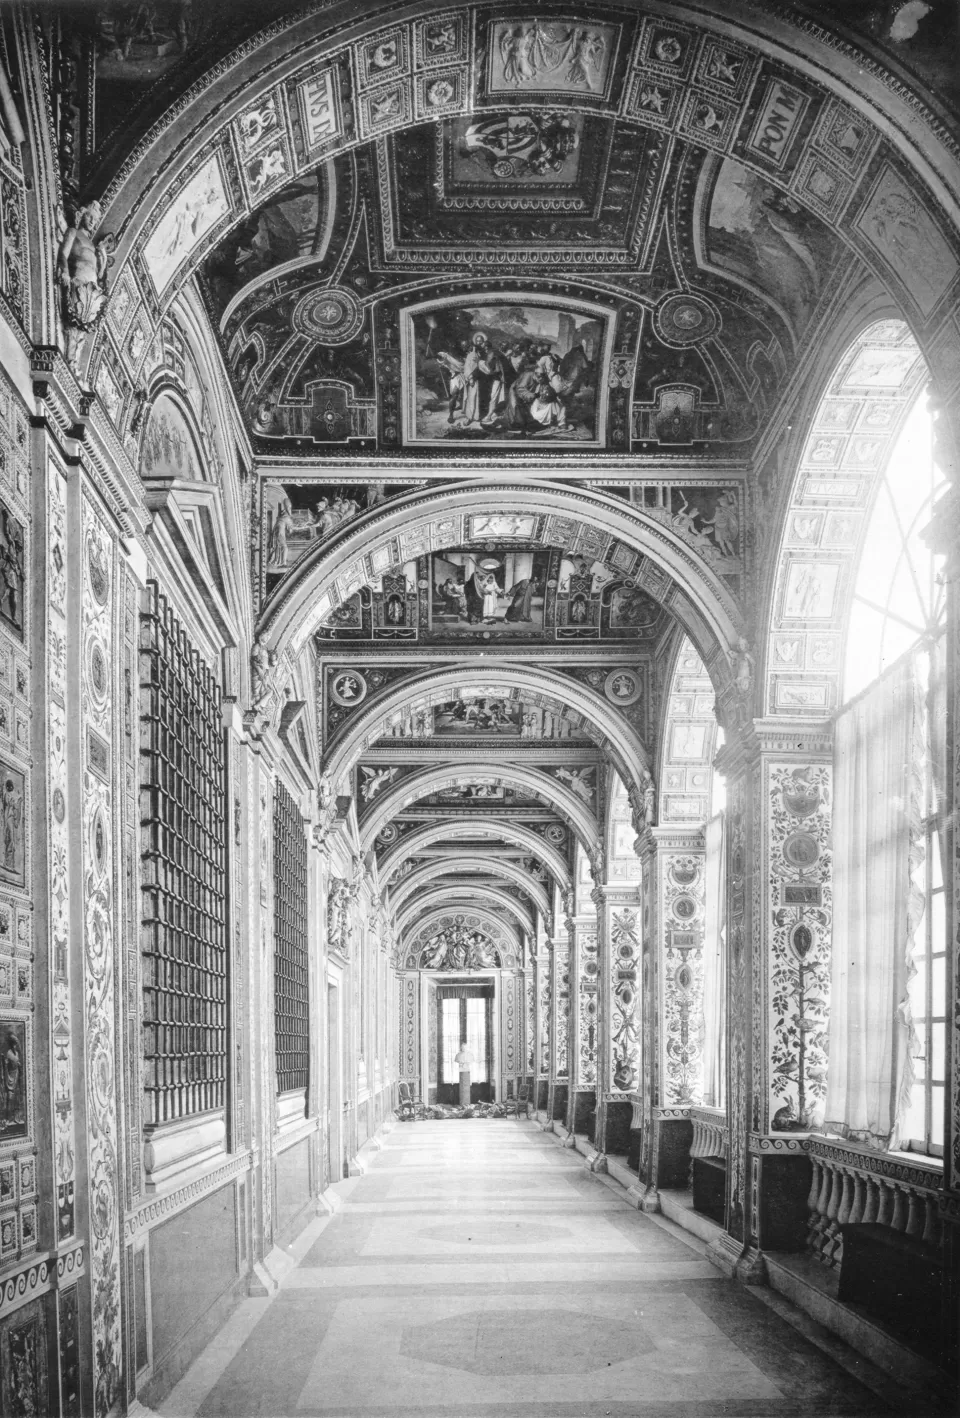 Raphael's Loggia in the Vatican